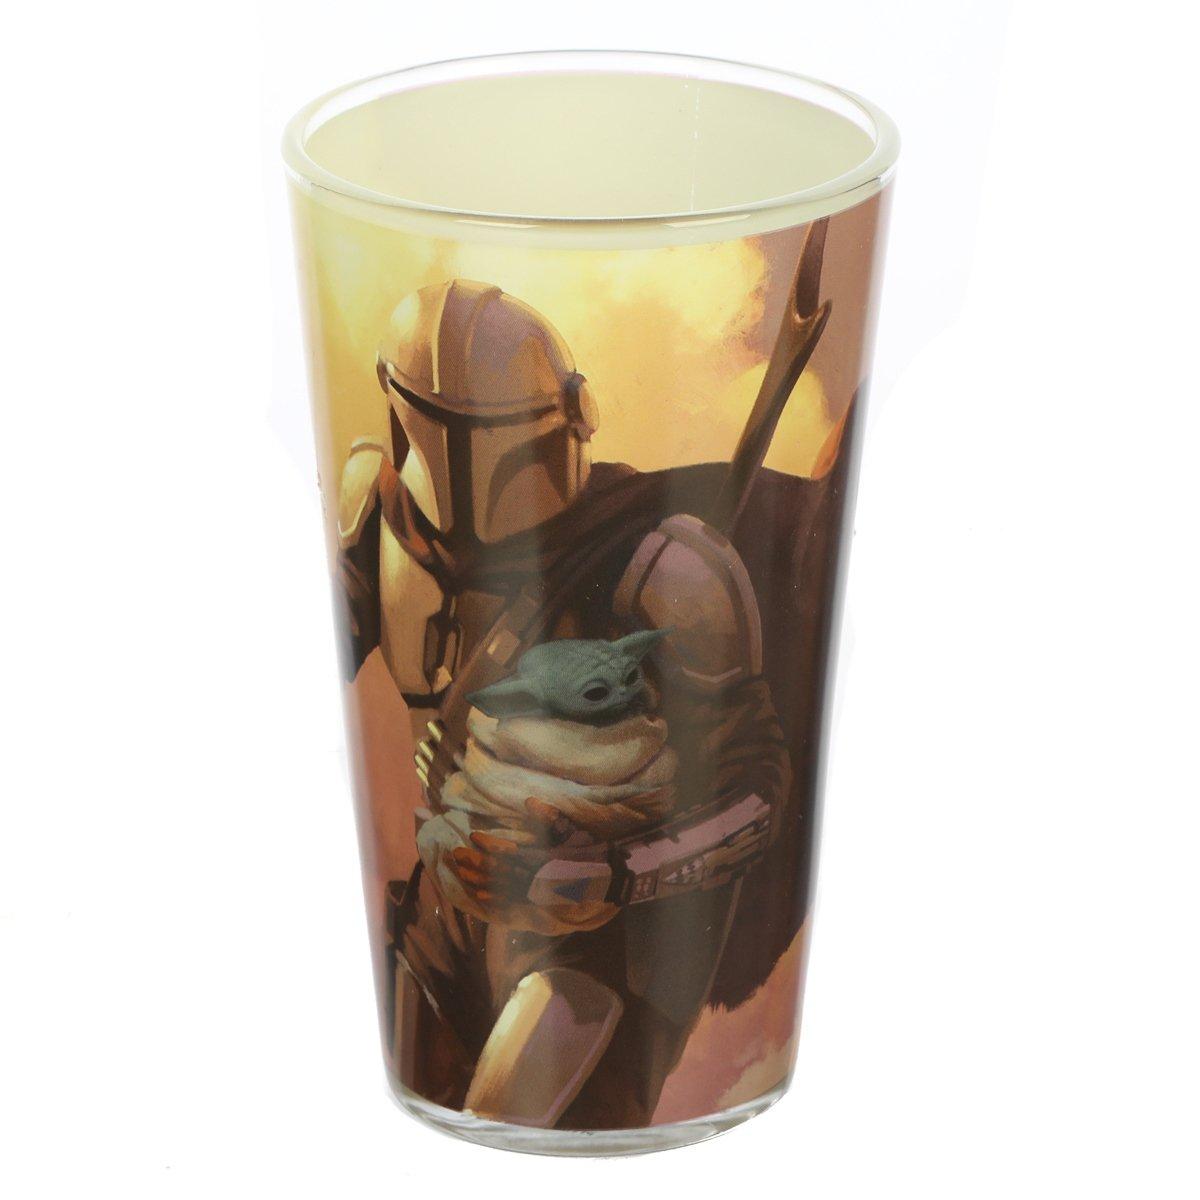 Star Wars 16 oz Pint Glass 2-Piece Set Mos Eisley Co. Skywalker